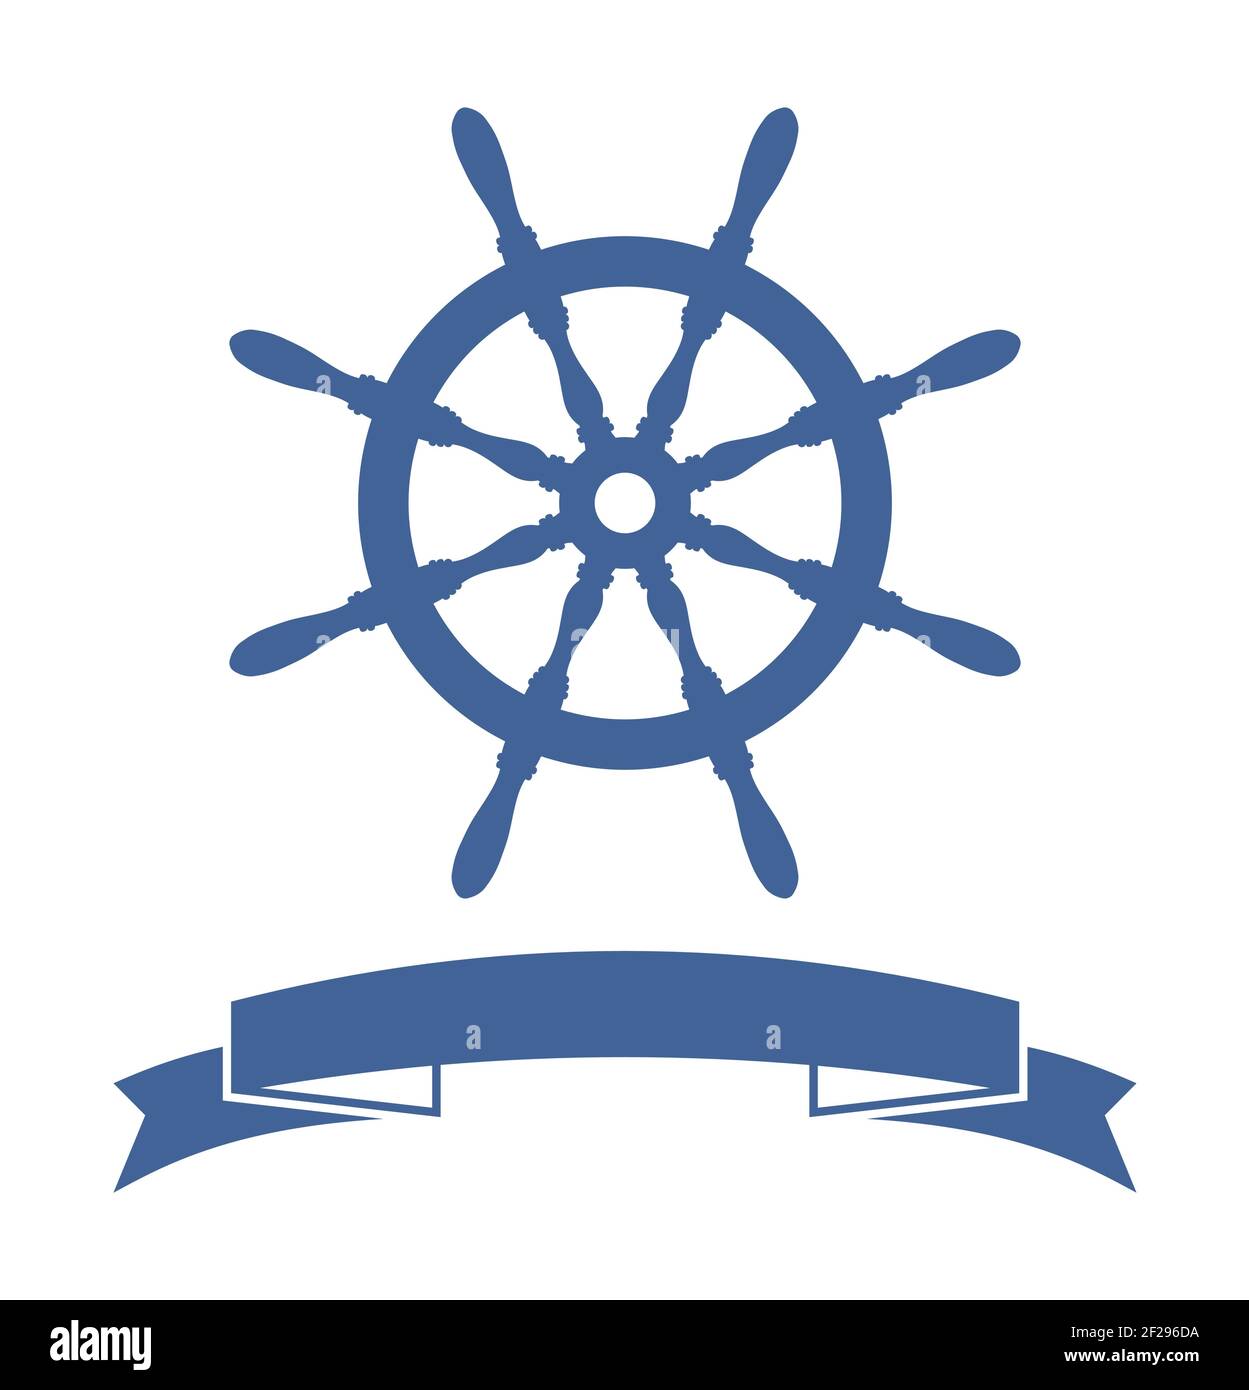 Ship wheel banner isolated on white background. vector illustration Stock Vector